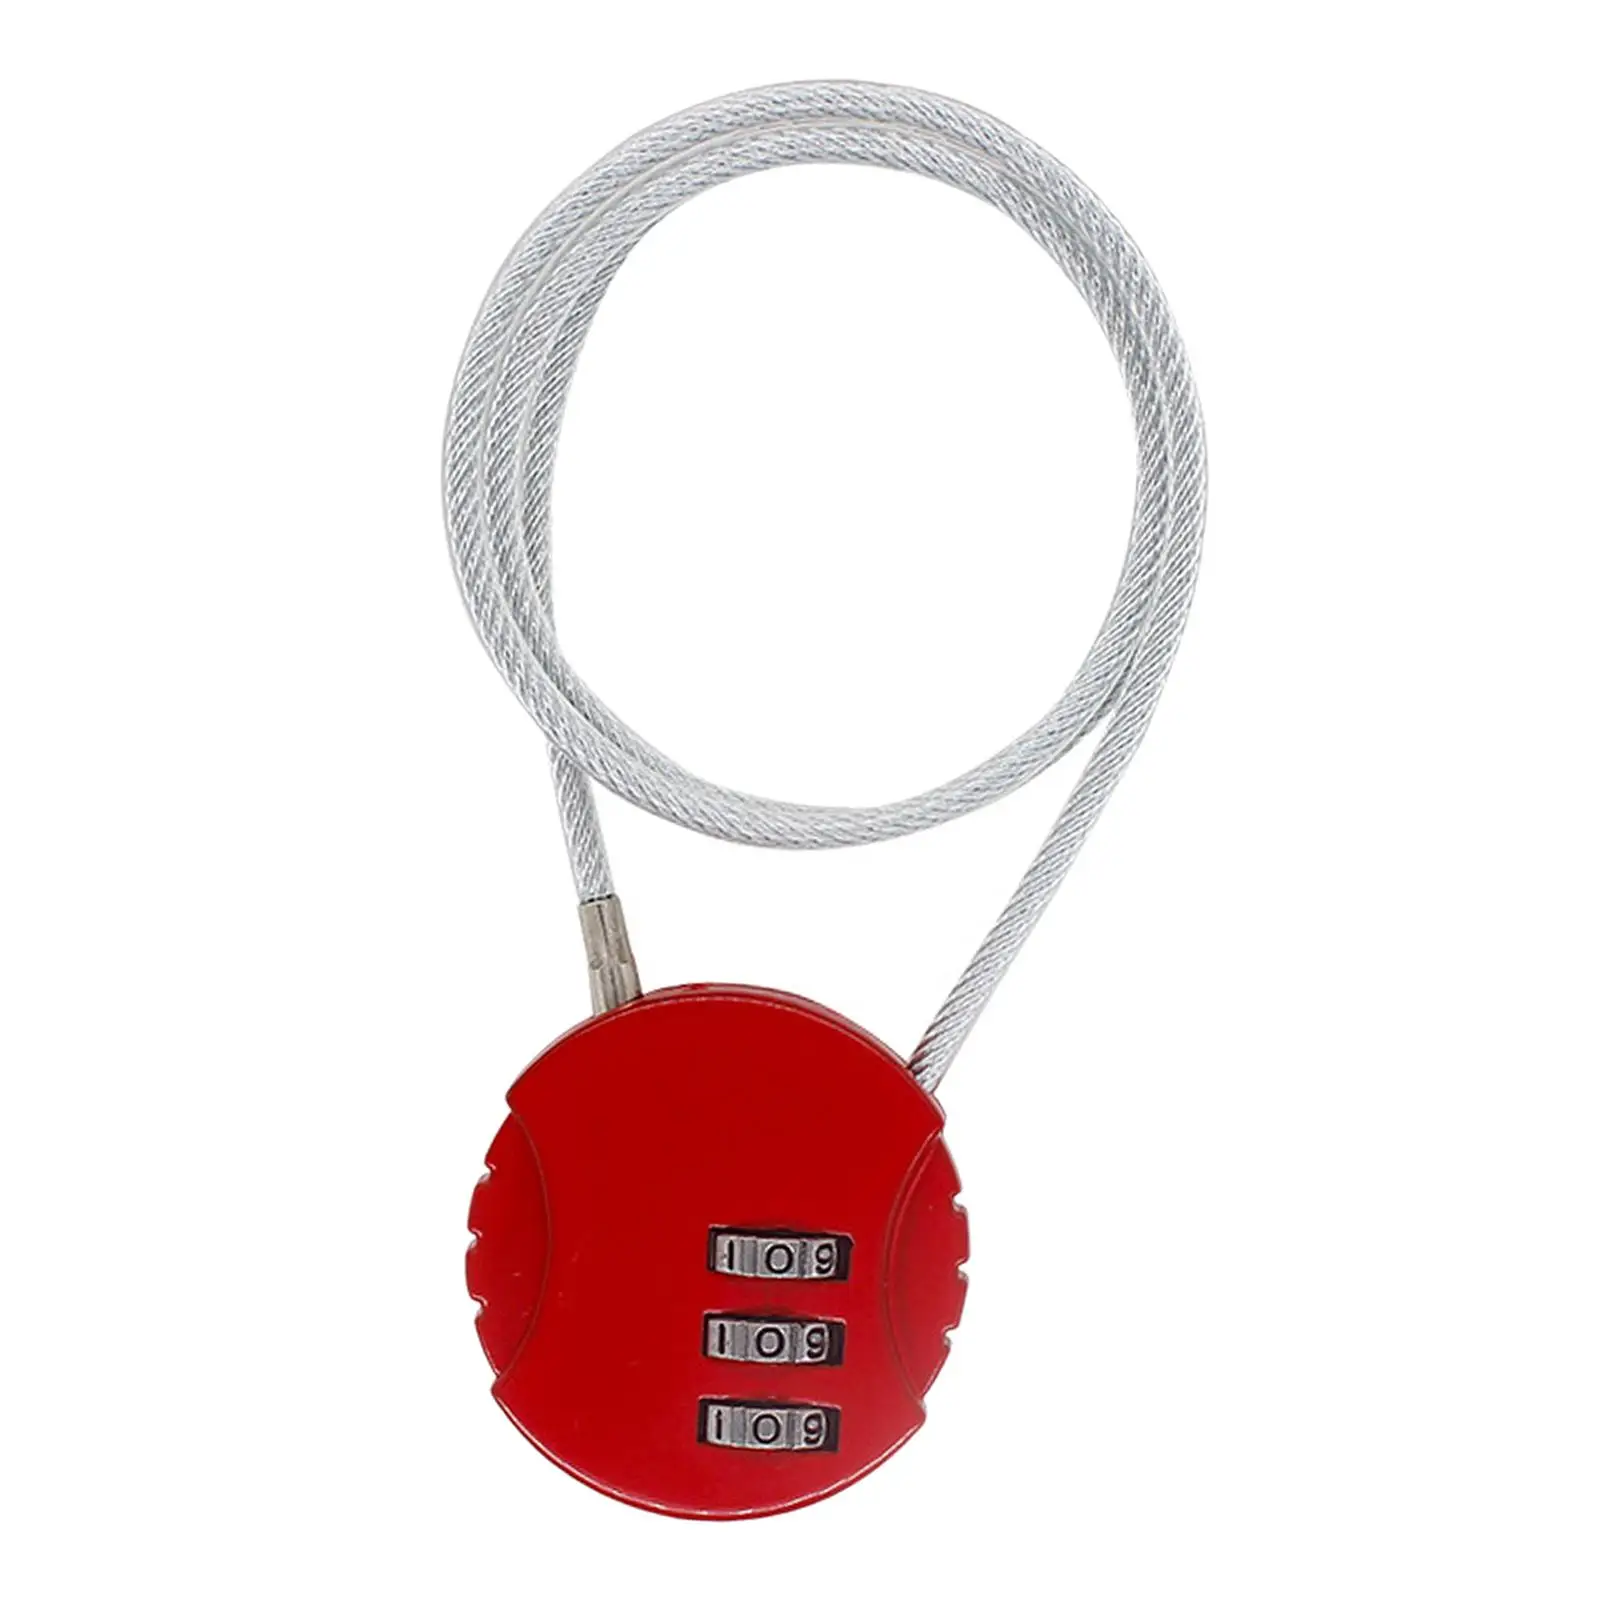 Helmet Lock Cycling lock Portable 3 Digit Resettable Mini Bicycle Locks for Suitcase Stroller Travel Luggage Locker